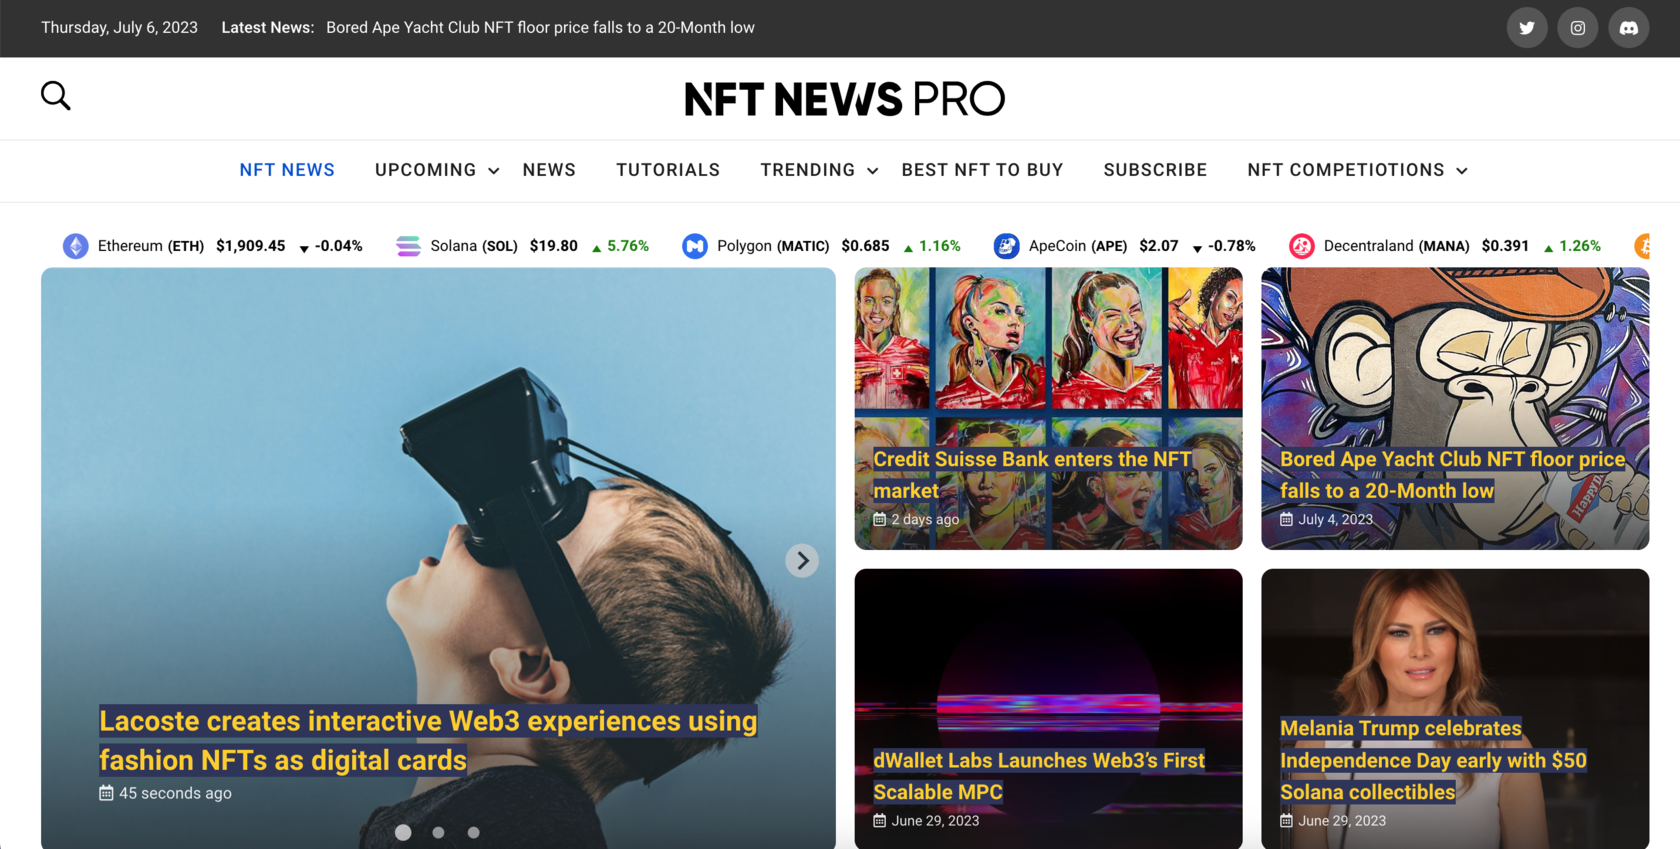 NFT NEWS PRO